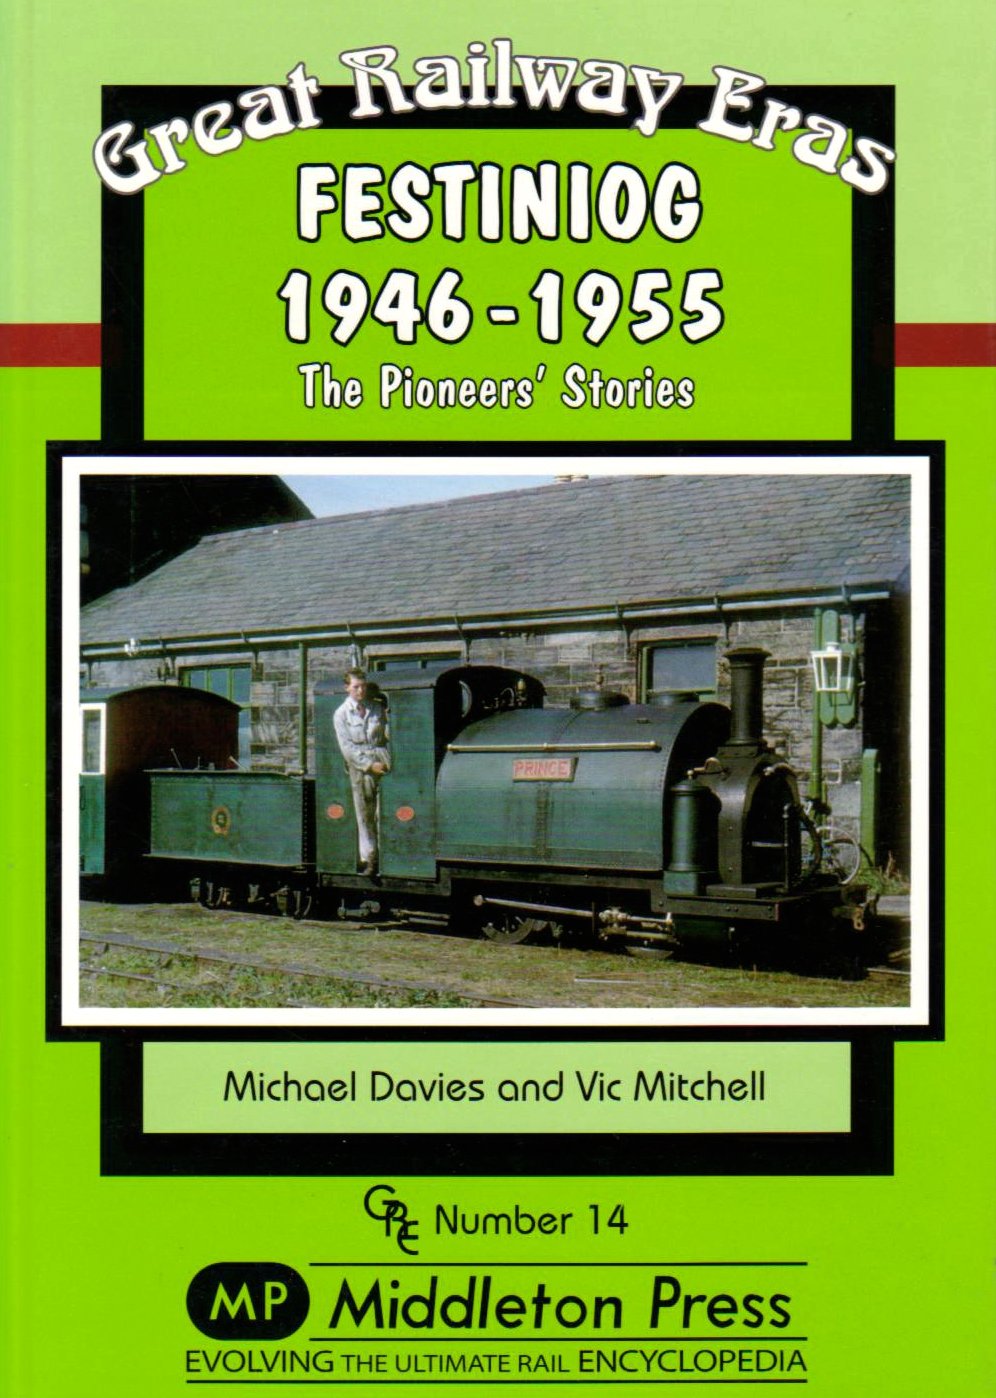 Great Railway Eras Festiniog 1946-55 The Pioneers' Stories